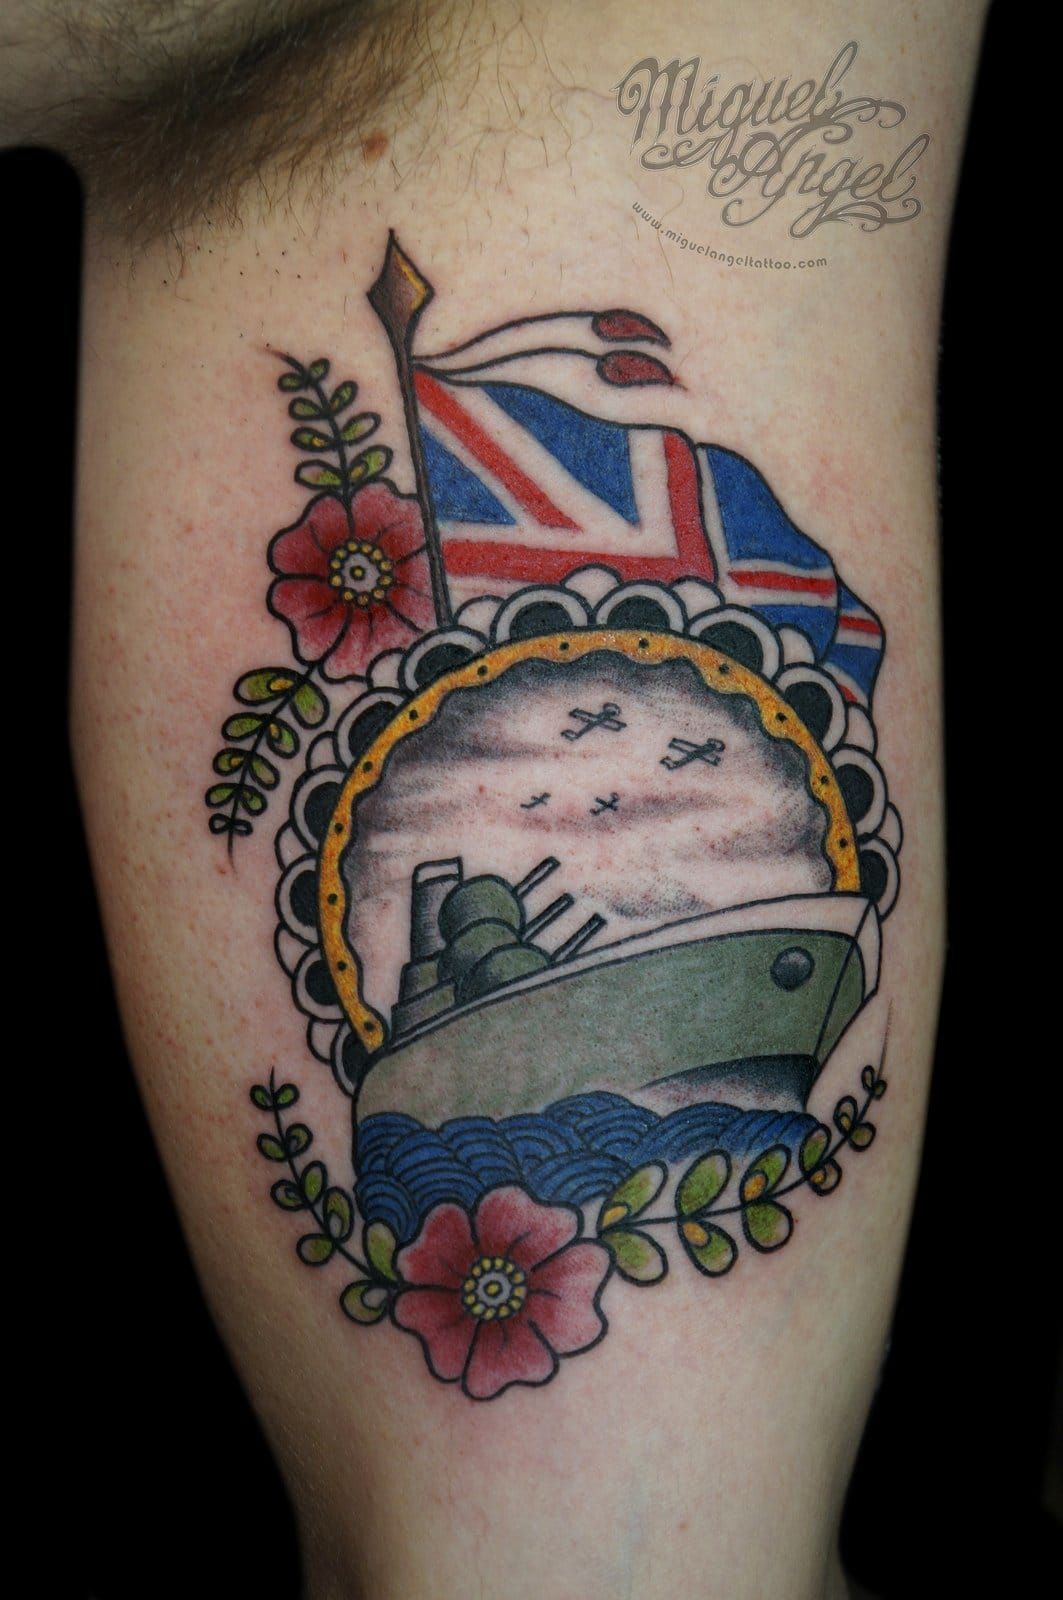 Miguel Angel tattooed this British naval tribute!